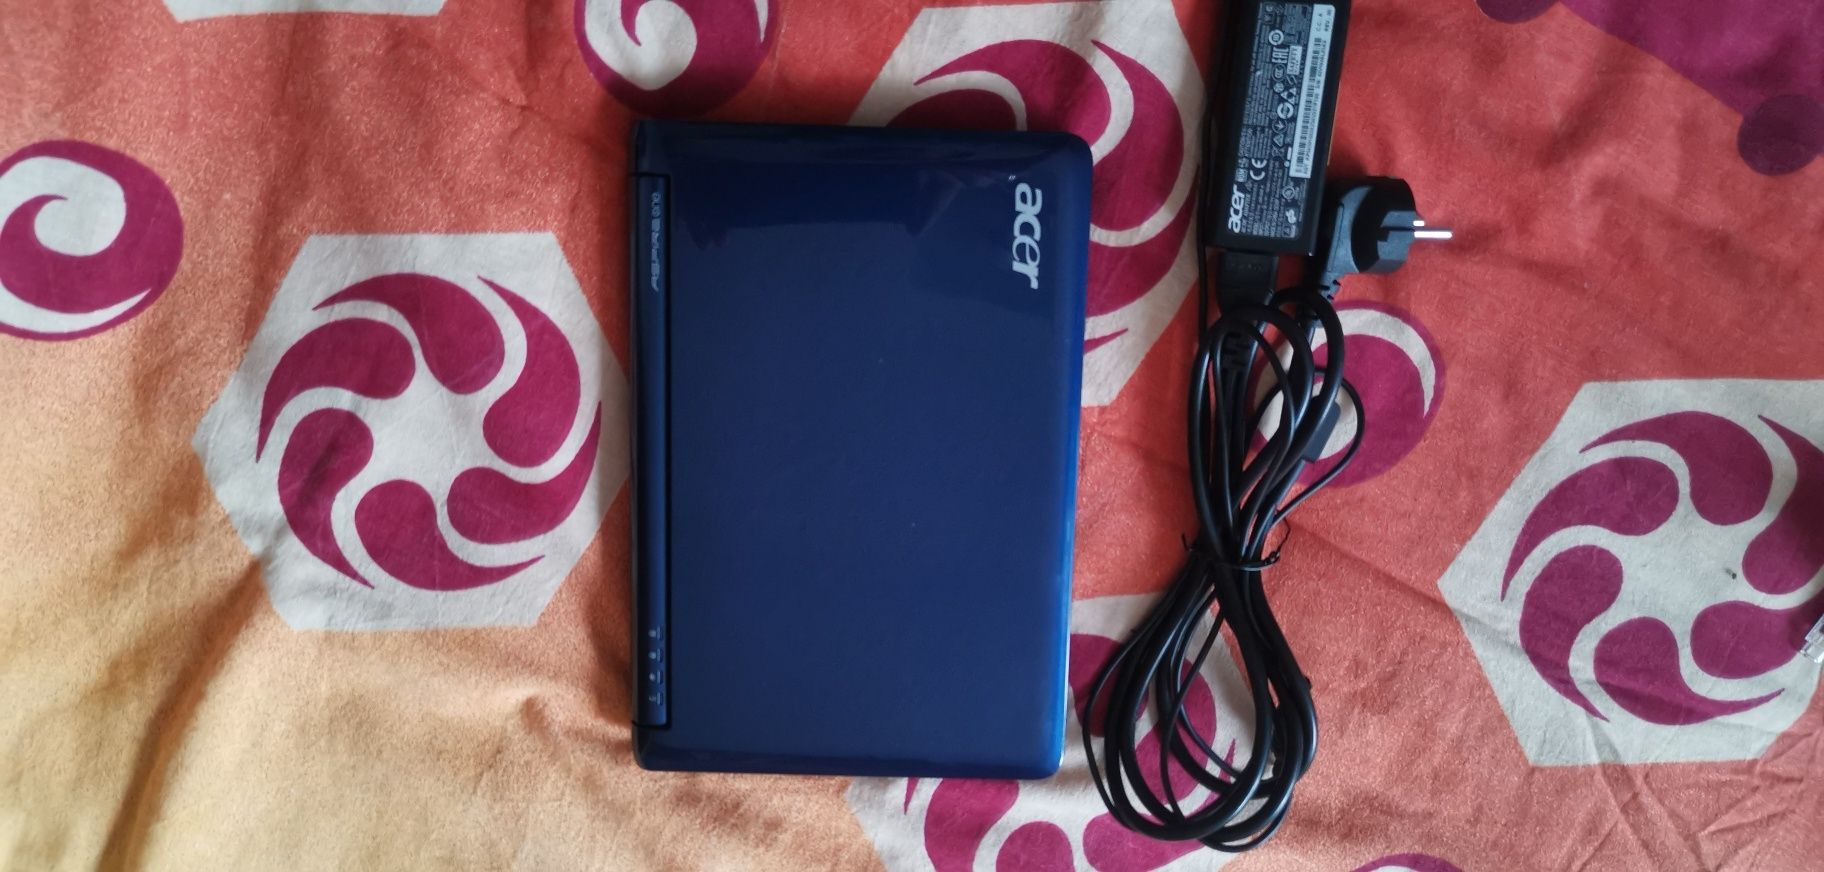 Netbook Acer Aspire One AOA110-mini laptop acer inspire